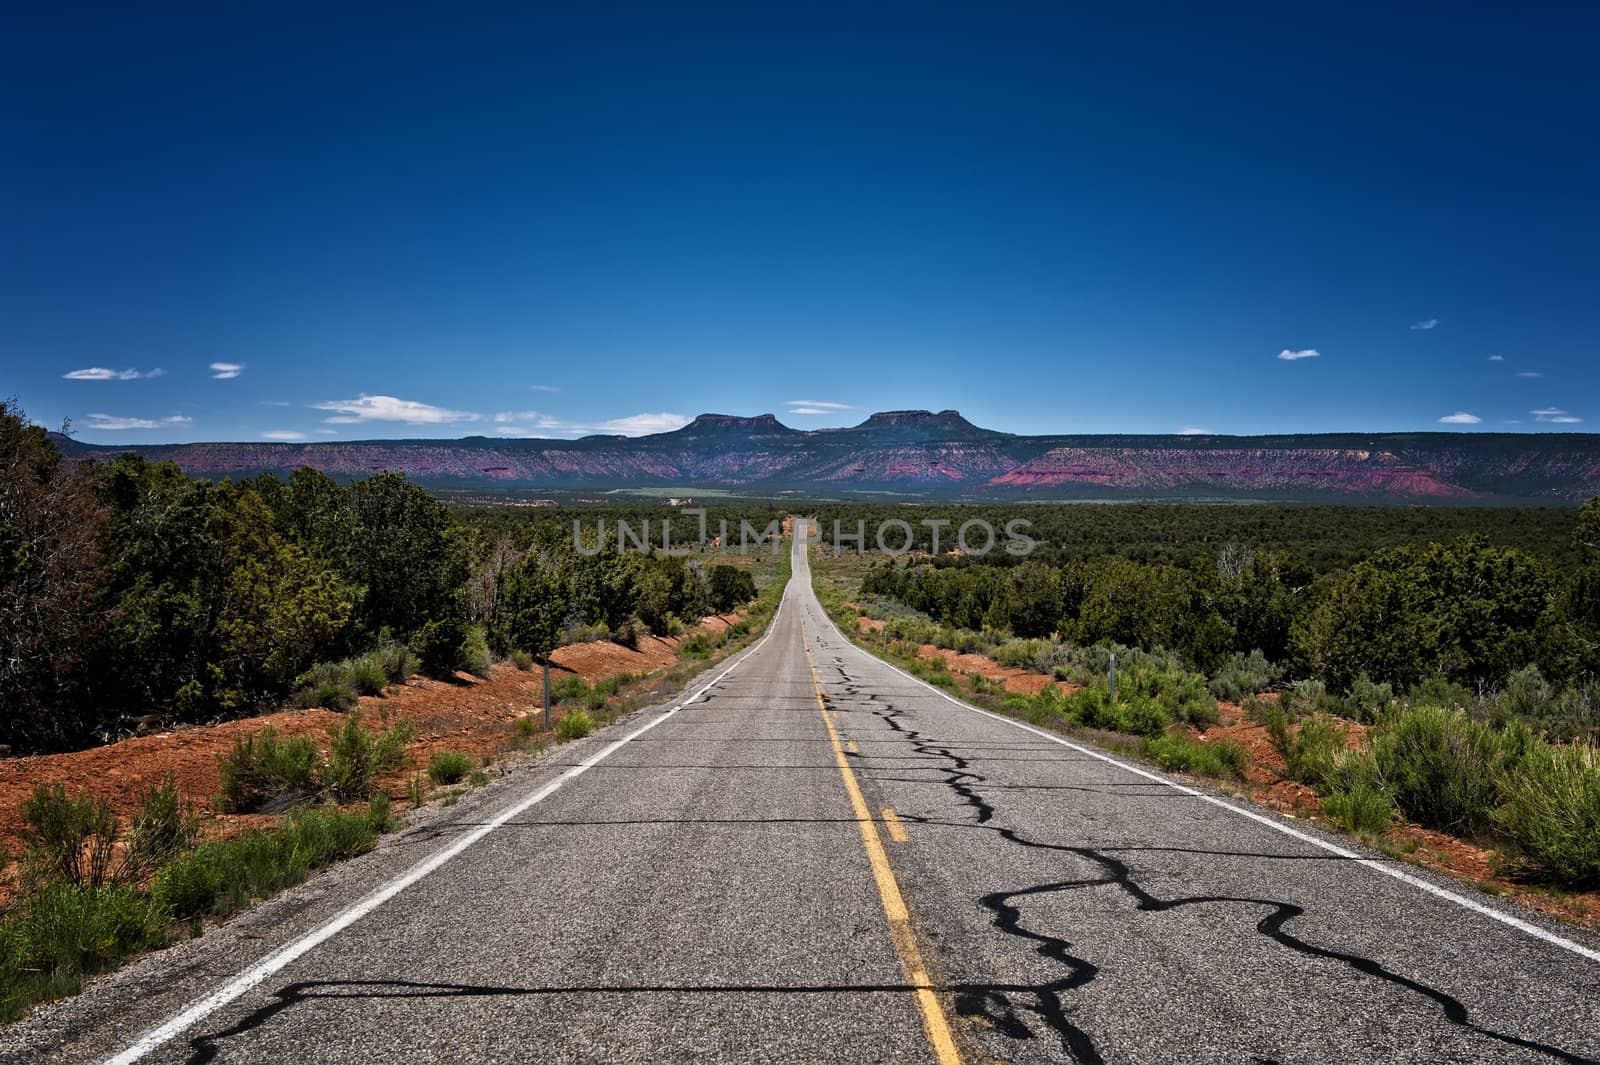 Image of a long desolate road leading off into a plateau